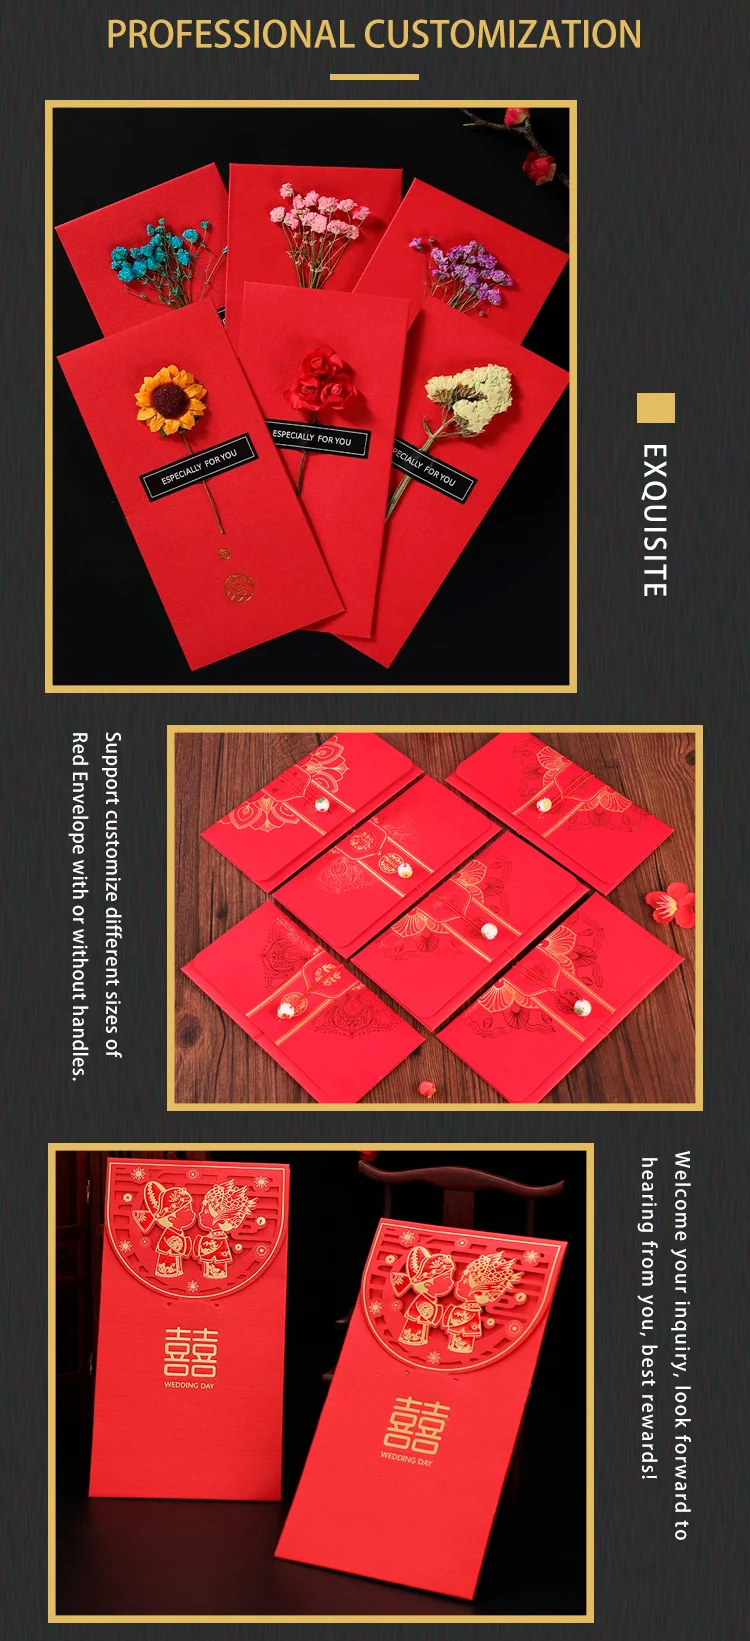 Hot Sale Custom Eco Friendly Packaging Envelope Bull Red Packet Paper Money Wallet